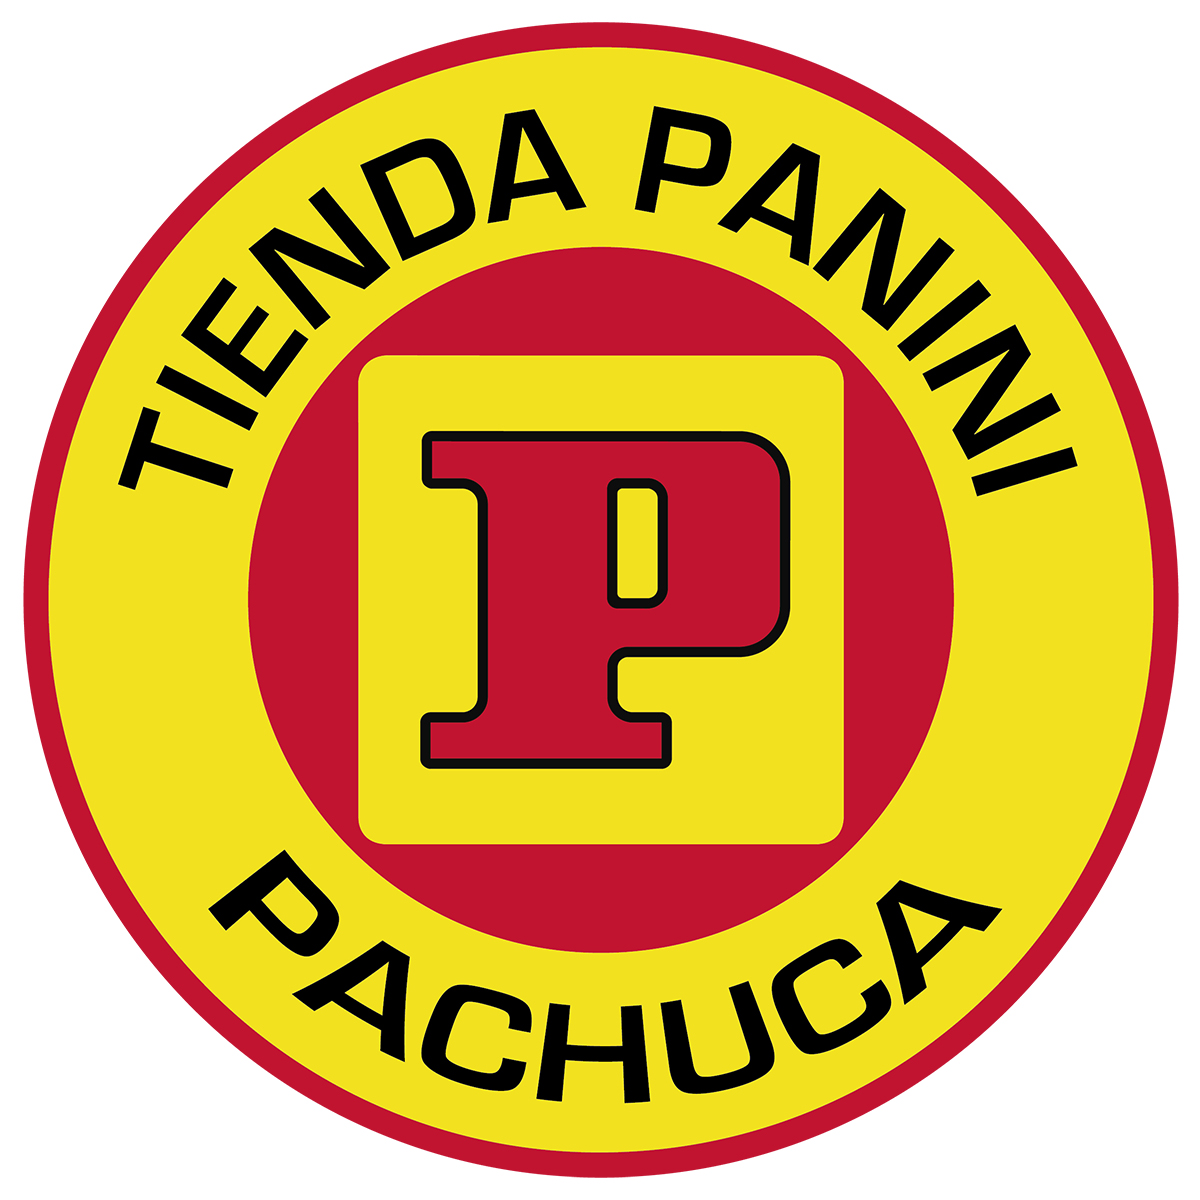 Plaza Revo Pachuca <B>L103</B> - TIENDA PANINI PACHUCA